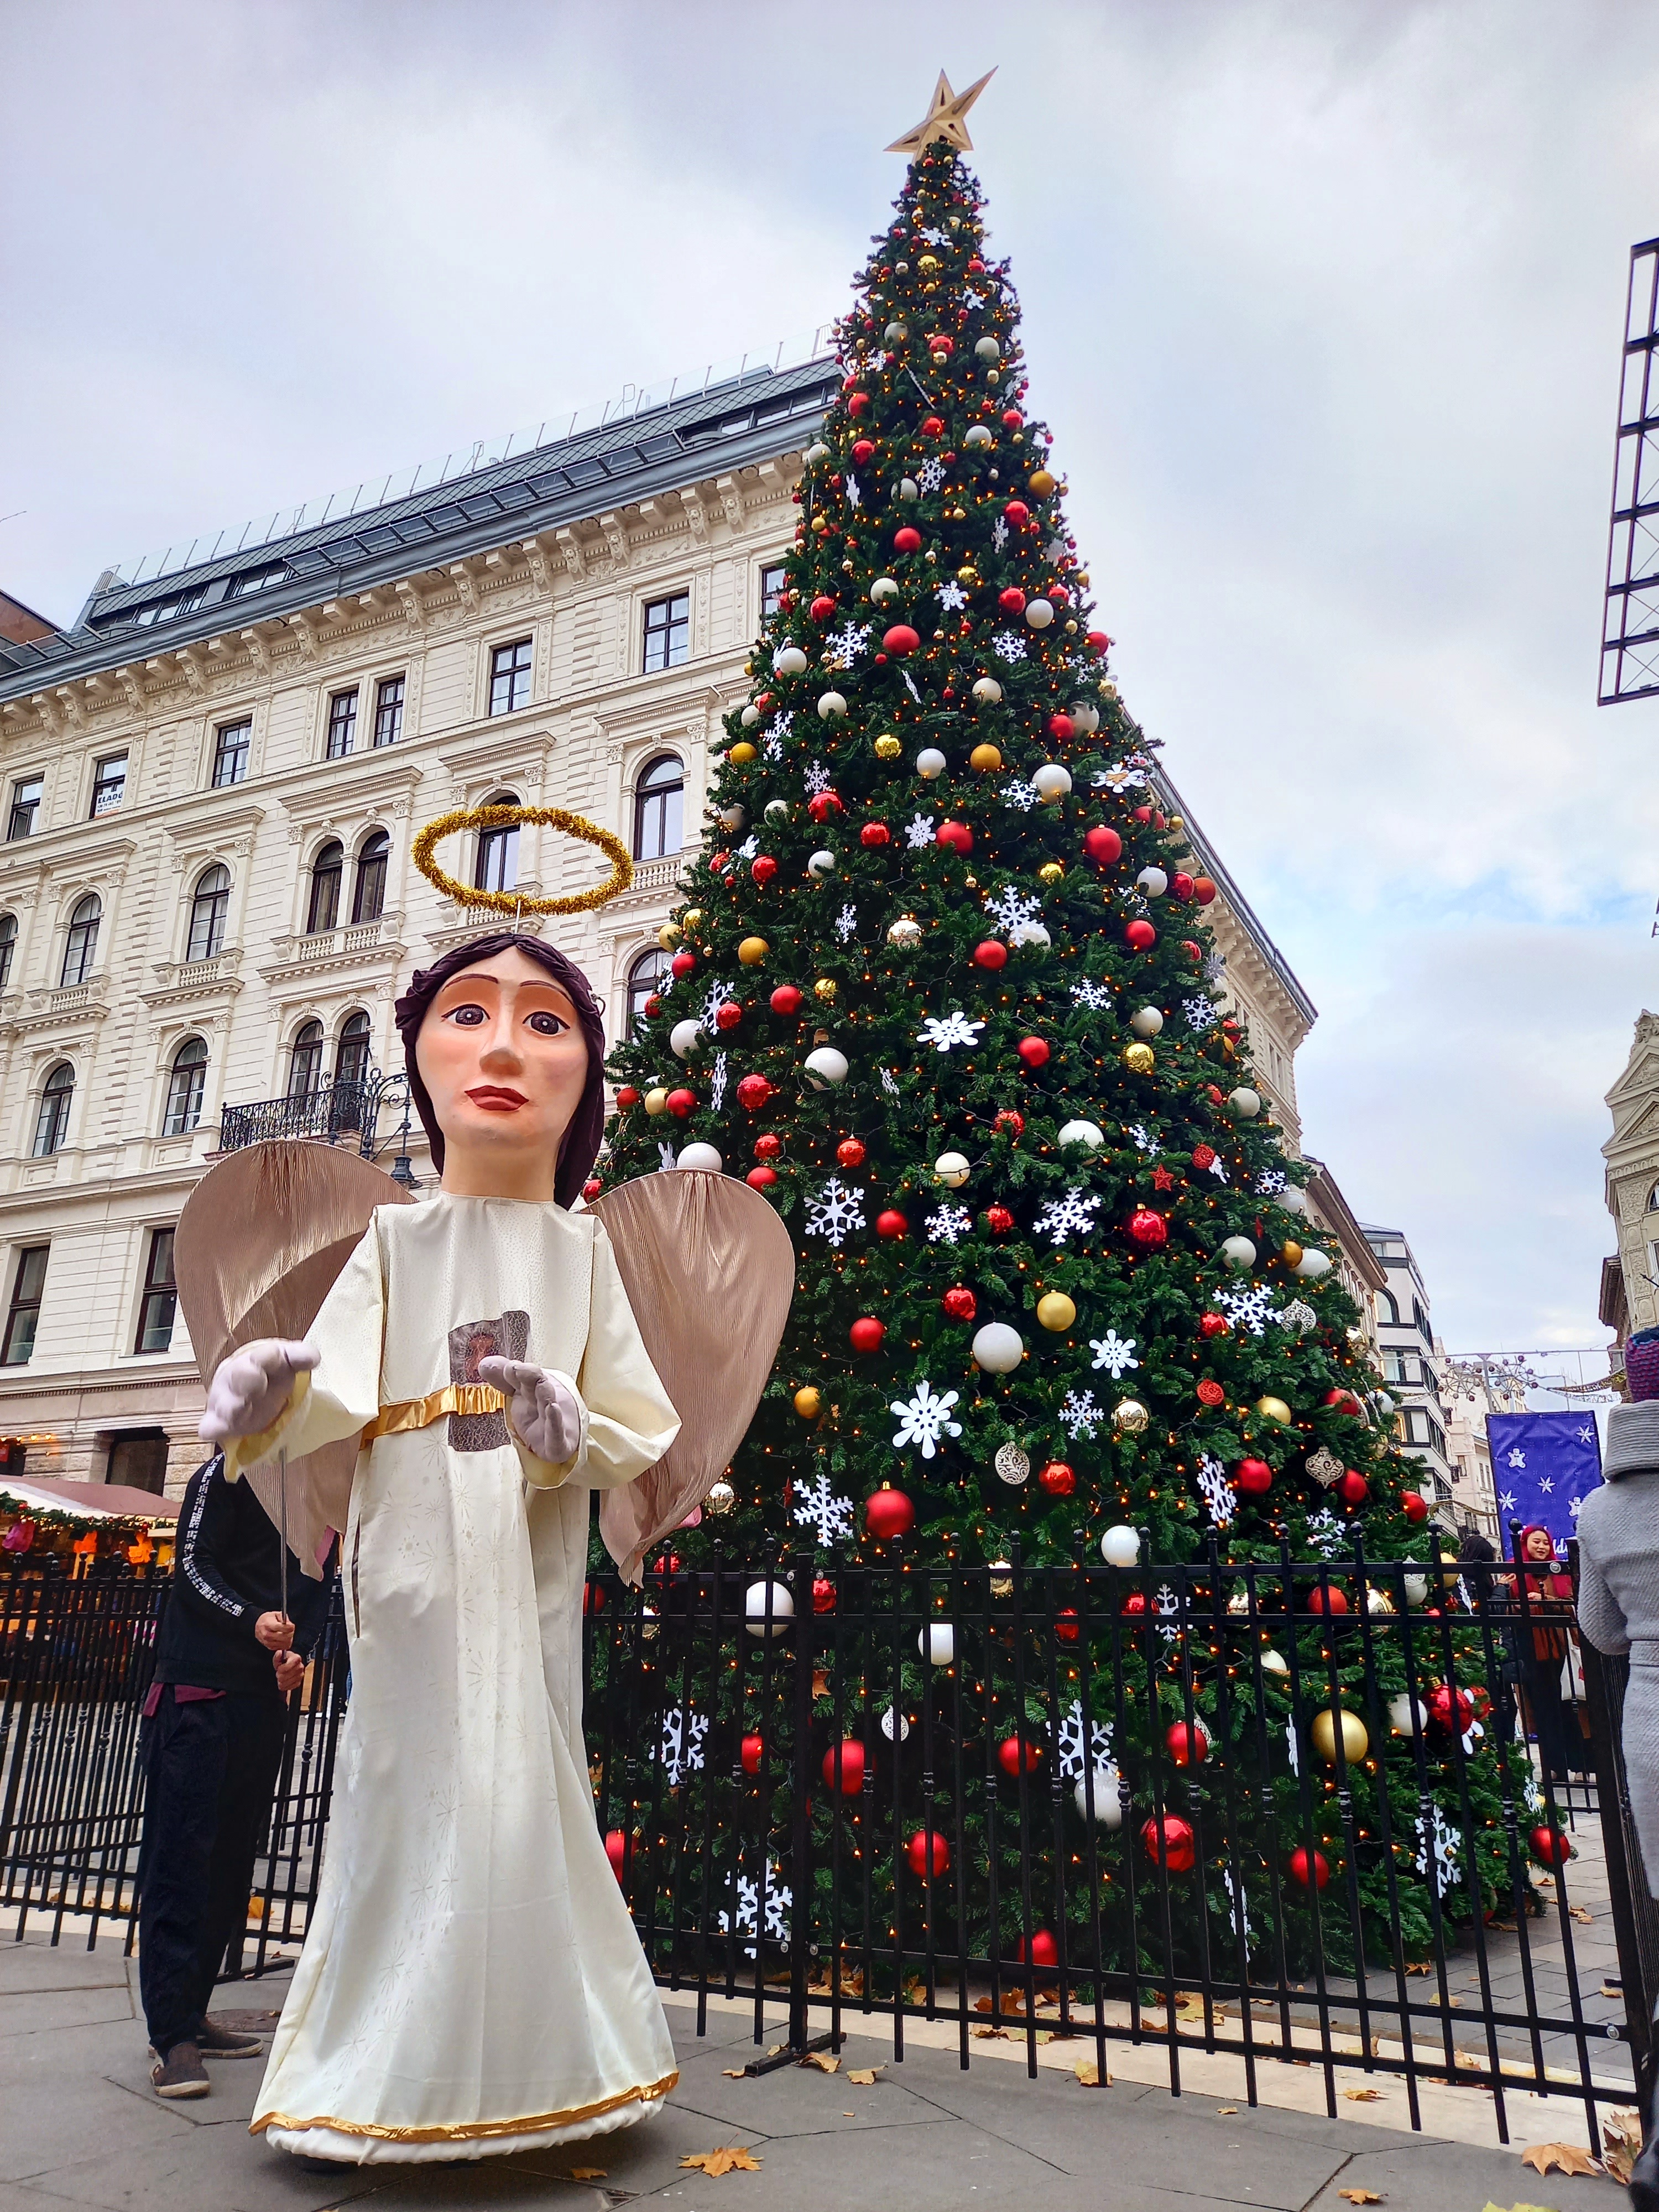 Budapest’s main Christmas market now open!